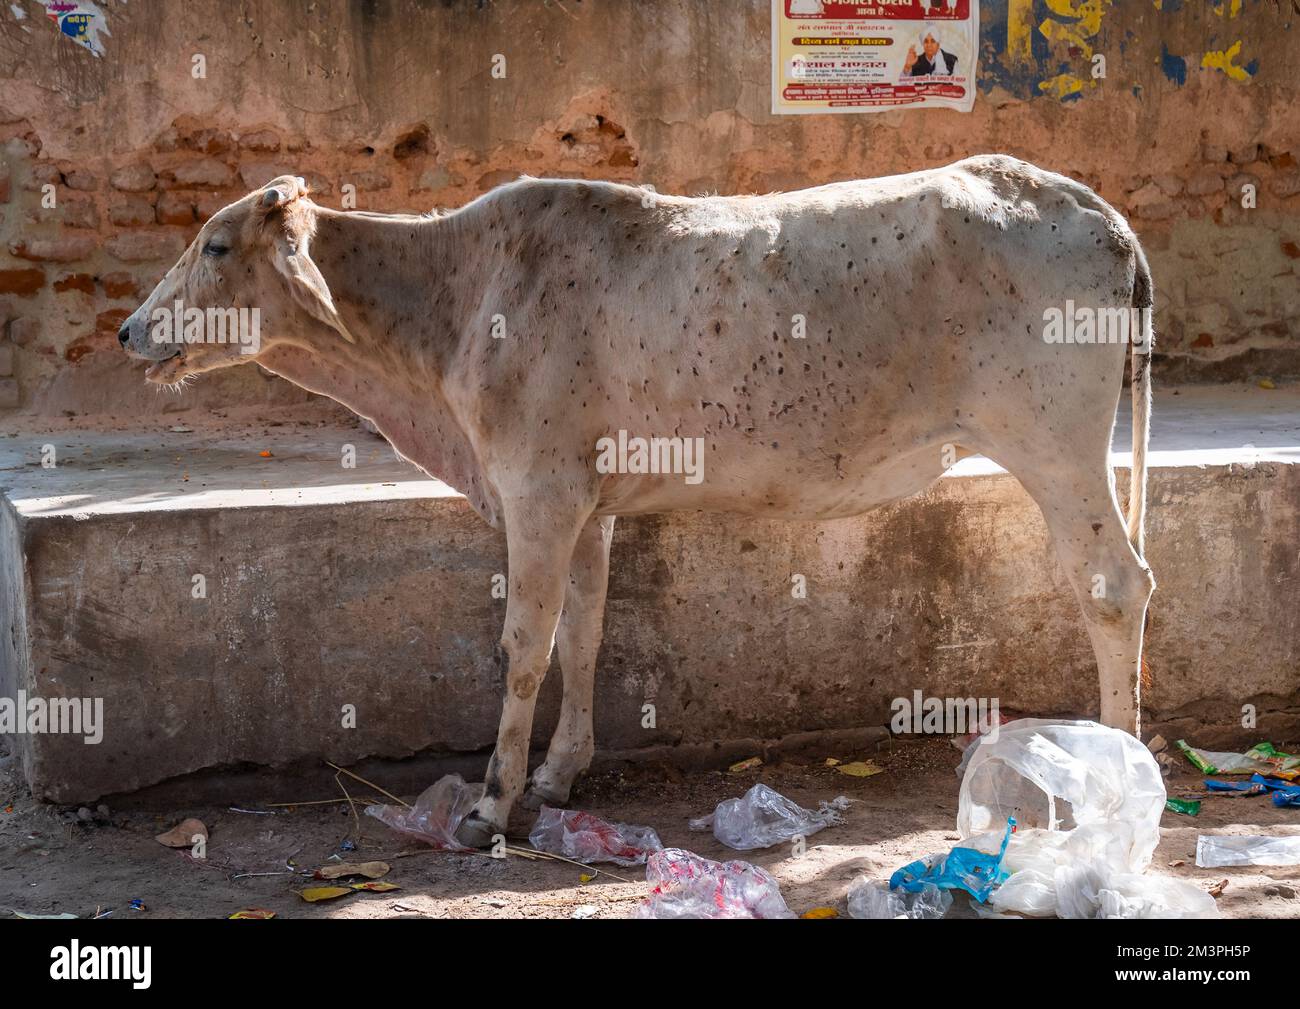 Cow with lumpy skin disease, Rajasthan, Nawalgarh, India Stock Photo